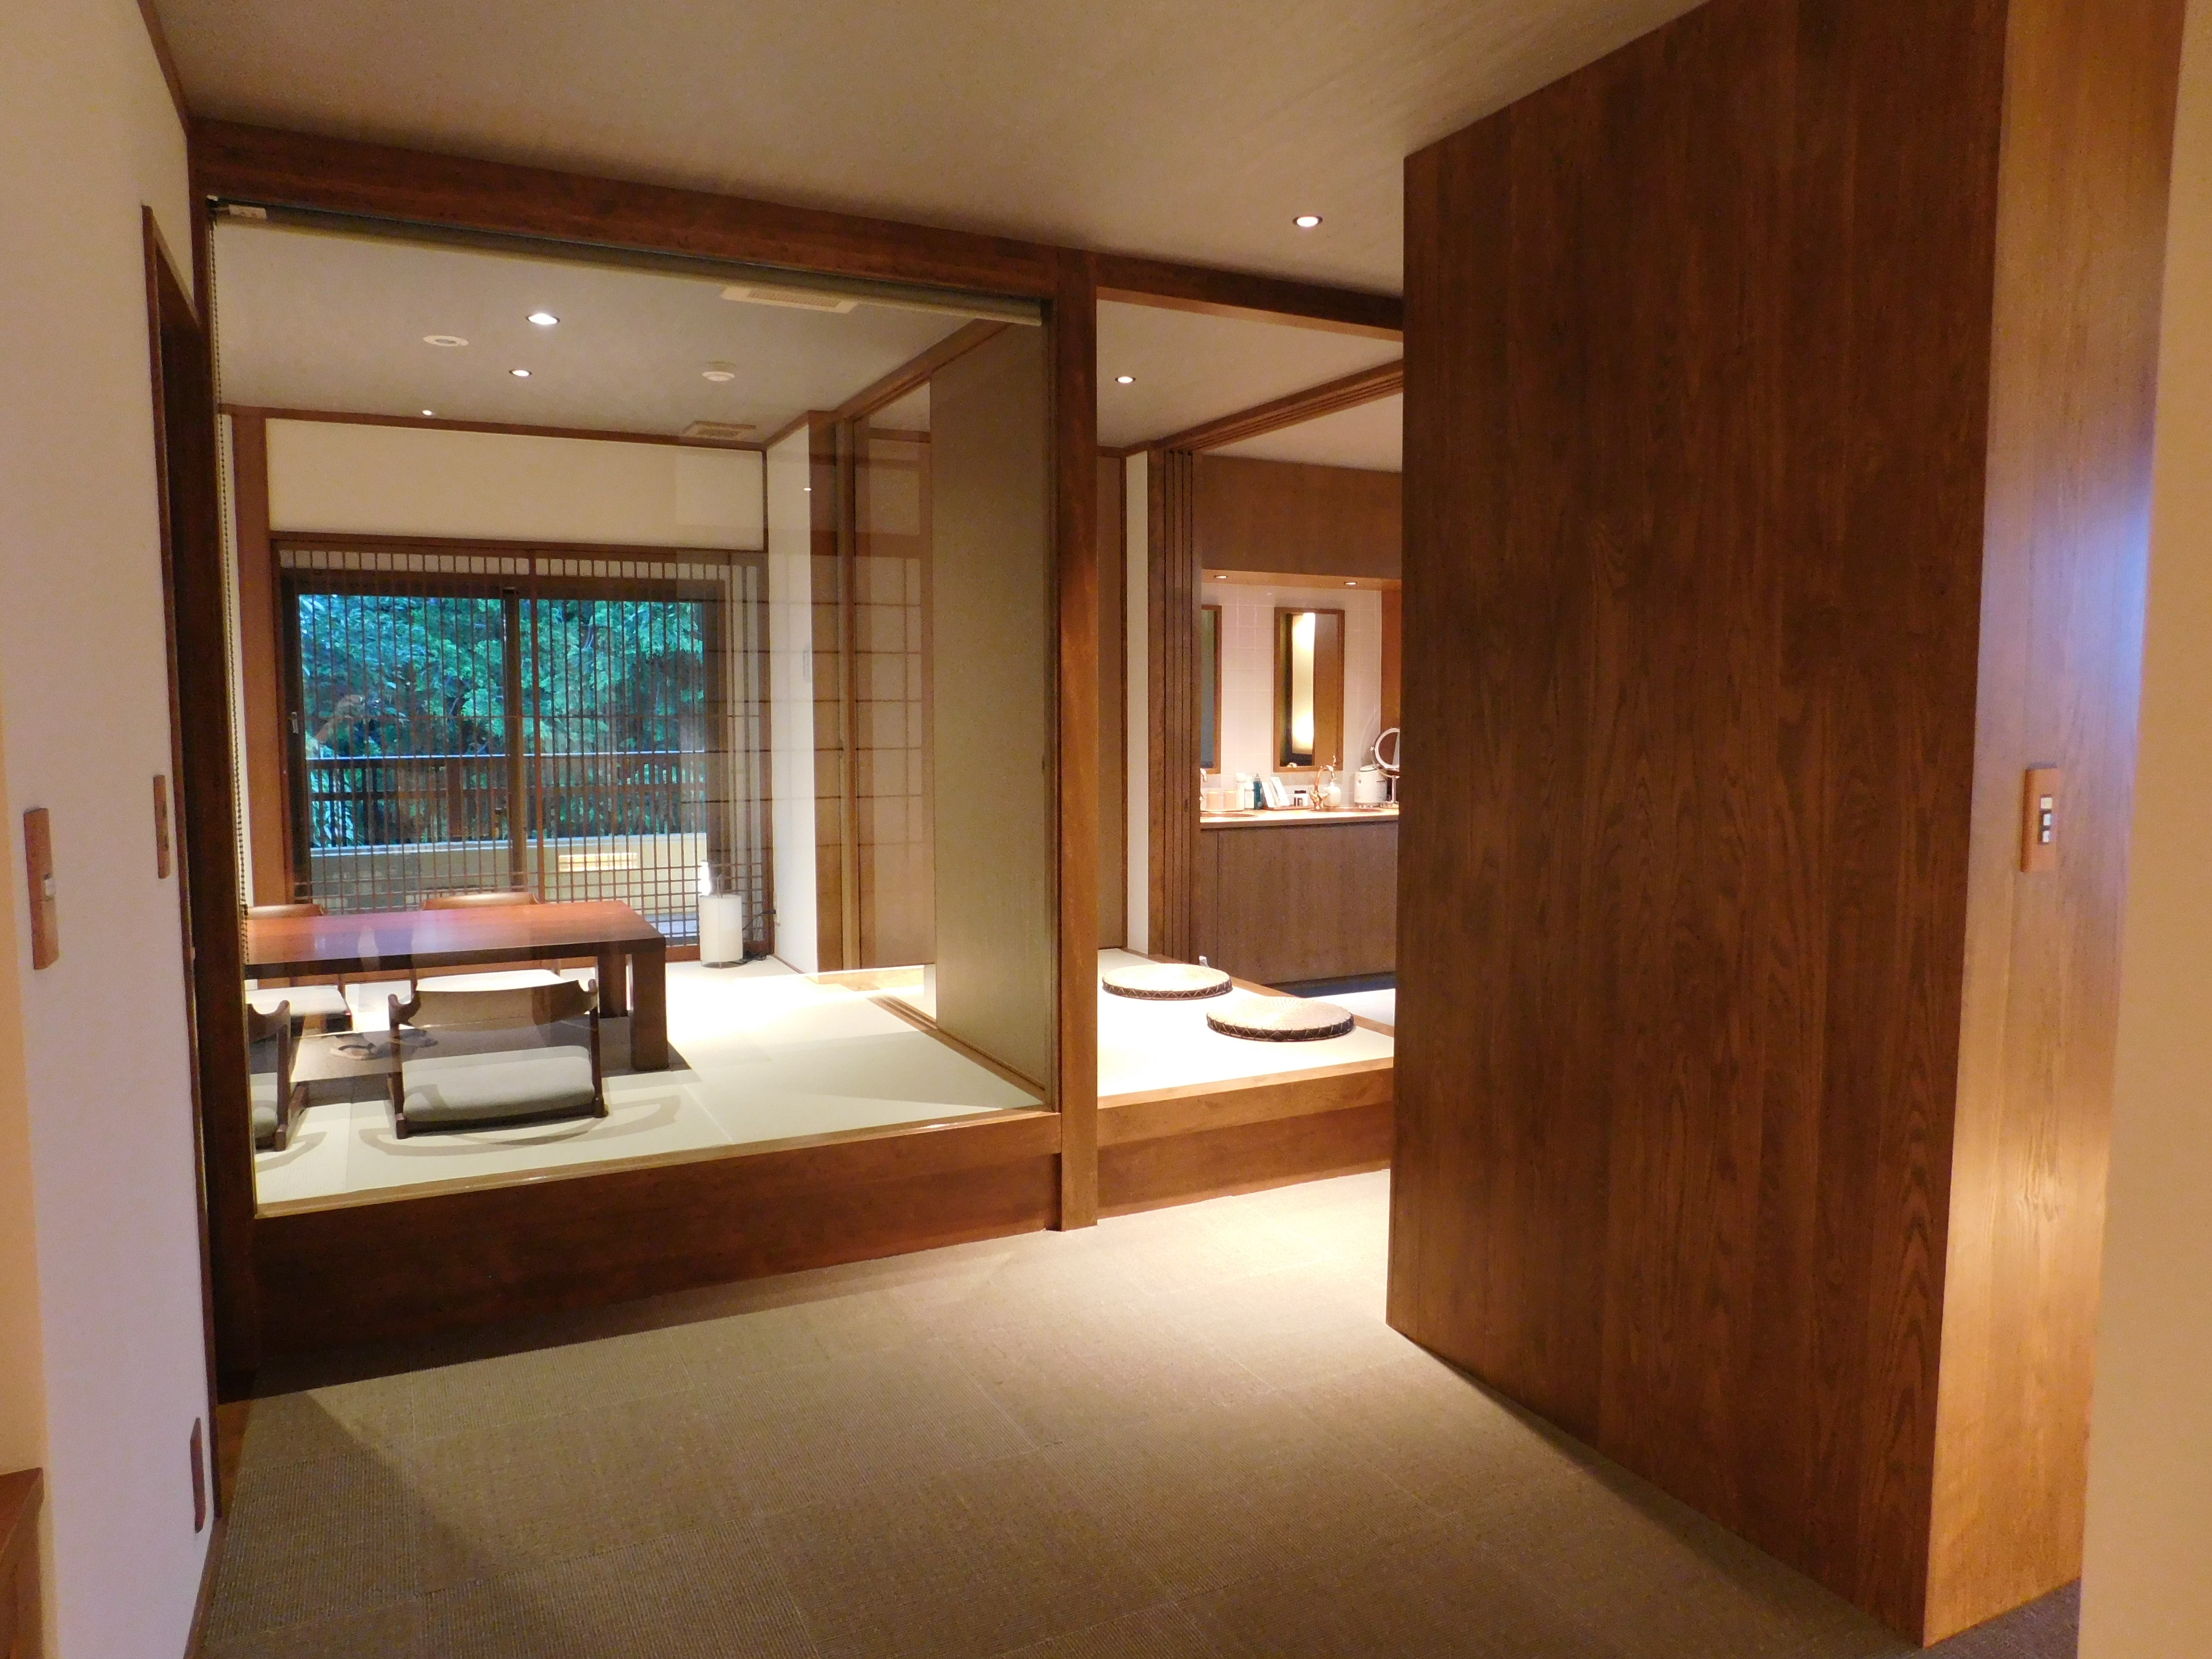 Annex special room "Kintoki" entrance